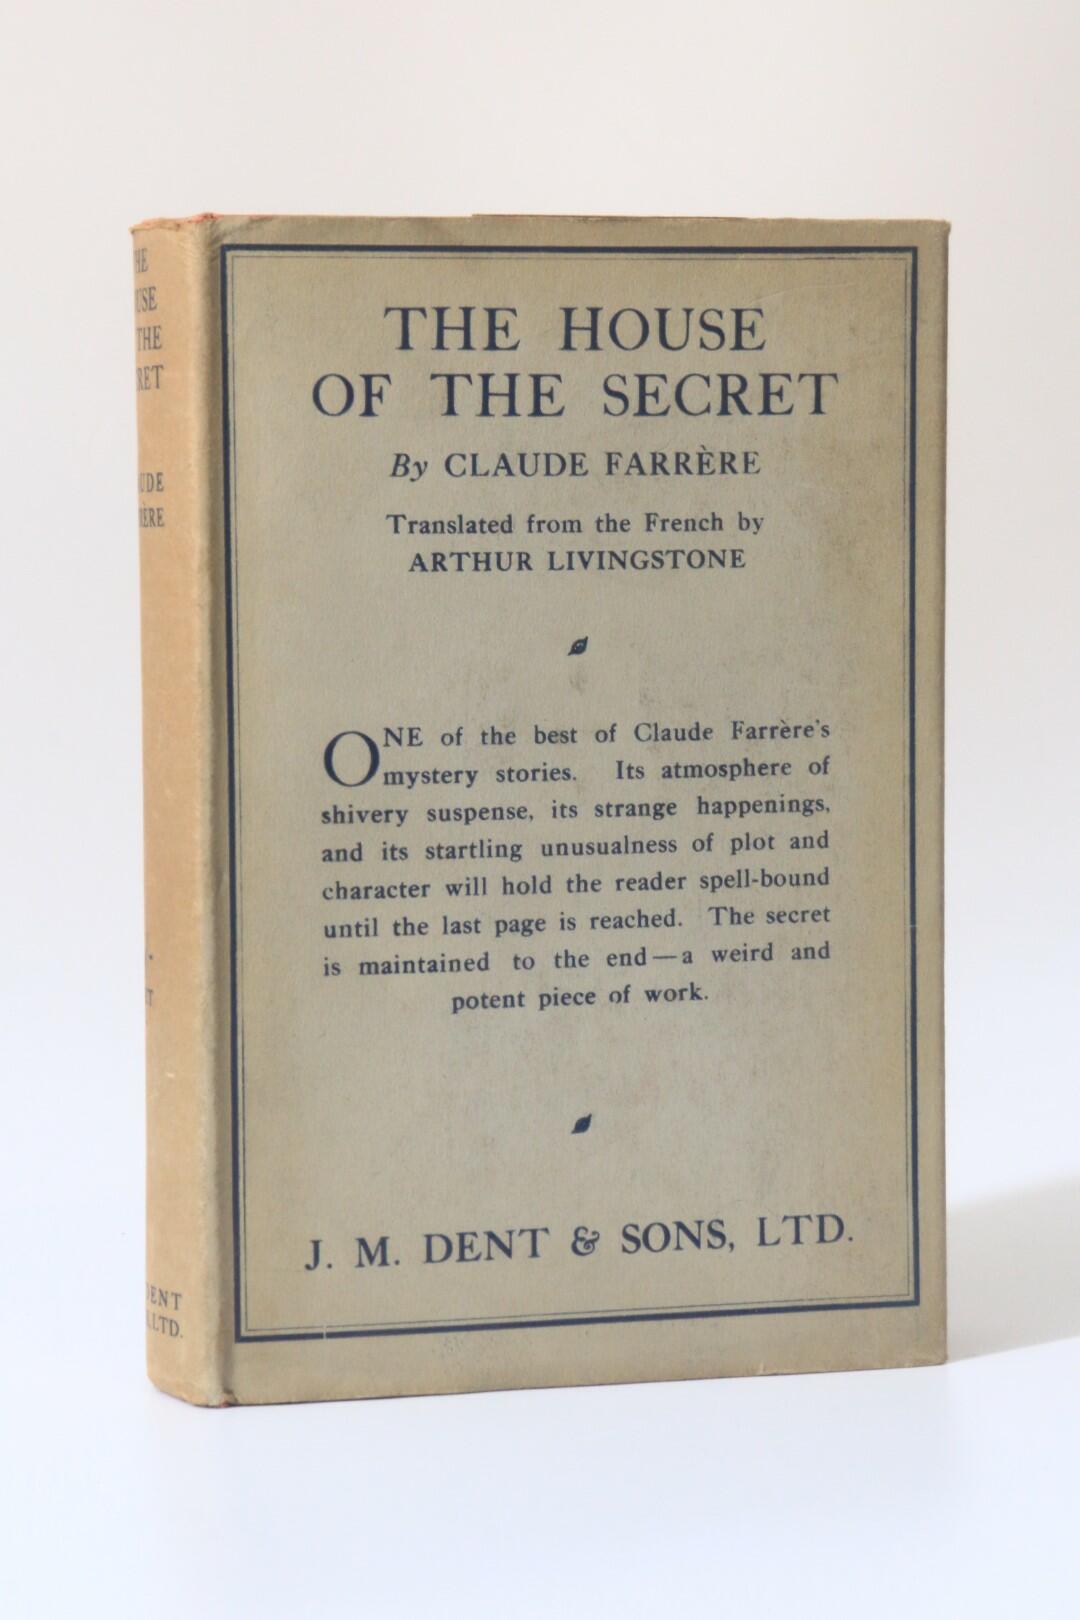 Claude Farrere [trans. Arthur Livingston] - The House of the Secret - J.M. Dent, 1923, First Edition.